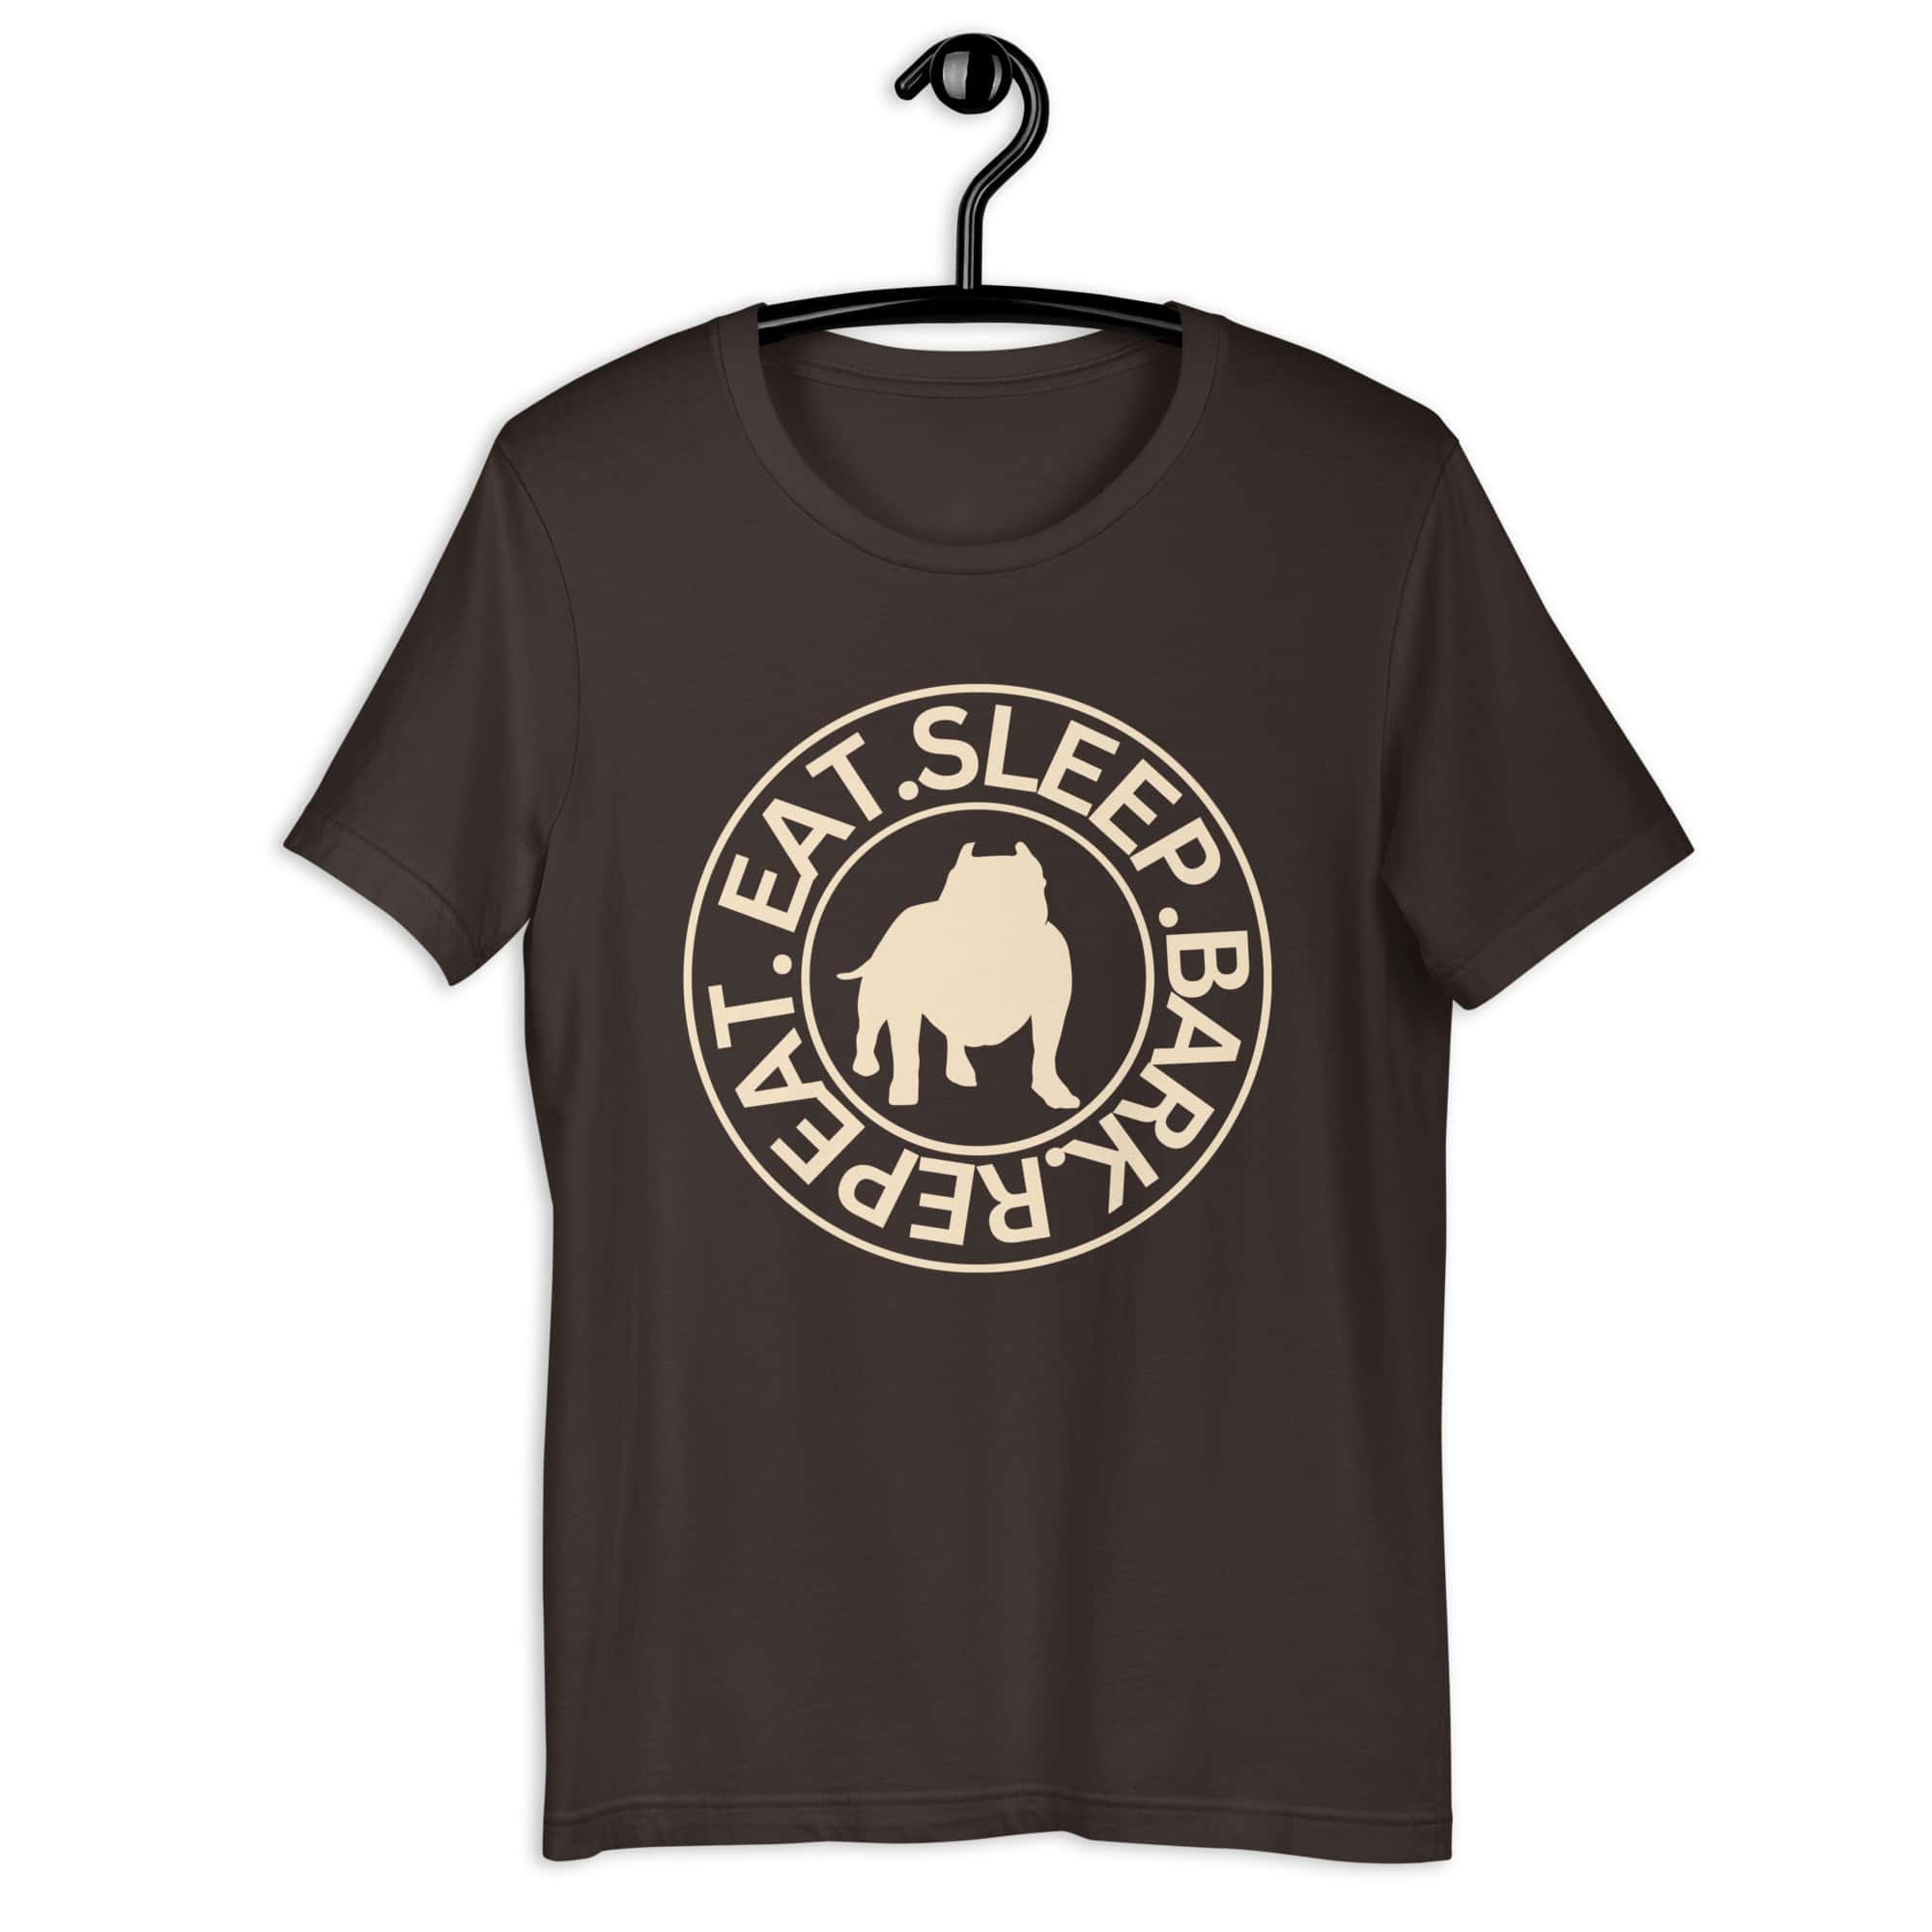 Eat Sleep Bark Repeat Bulldog Unisex T-Shirt. Brown